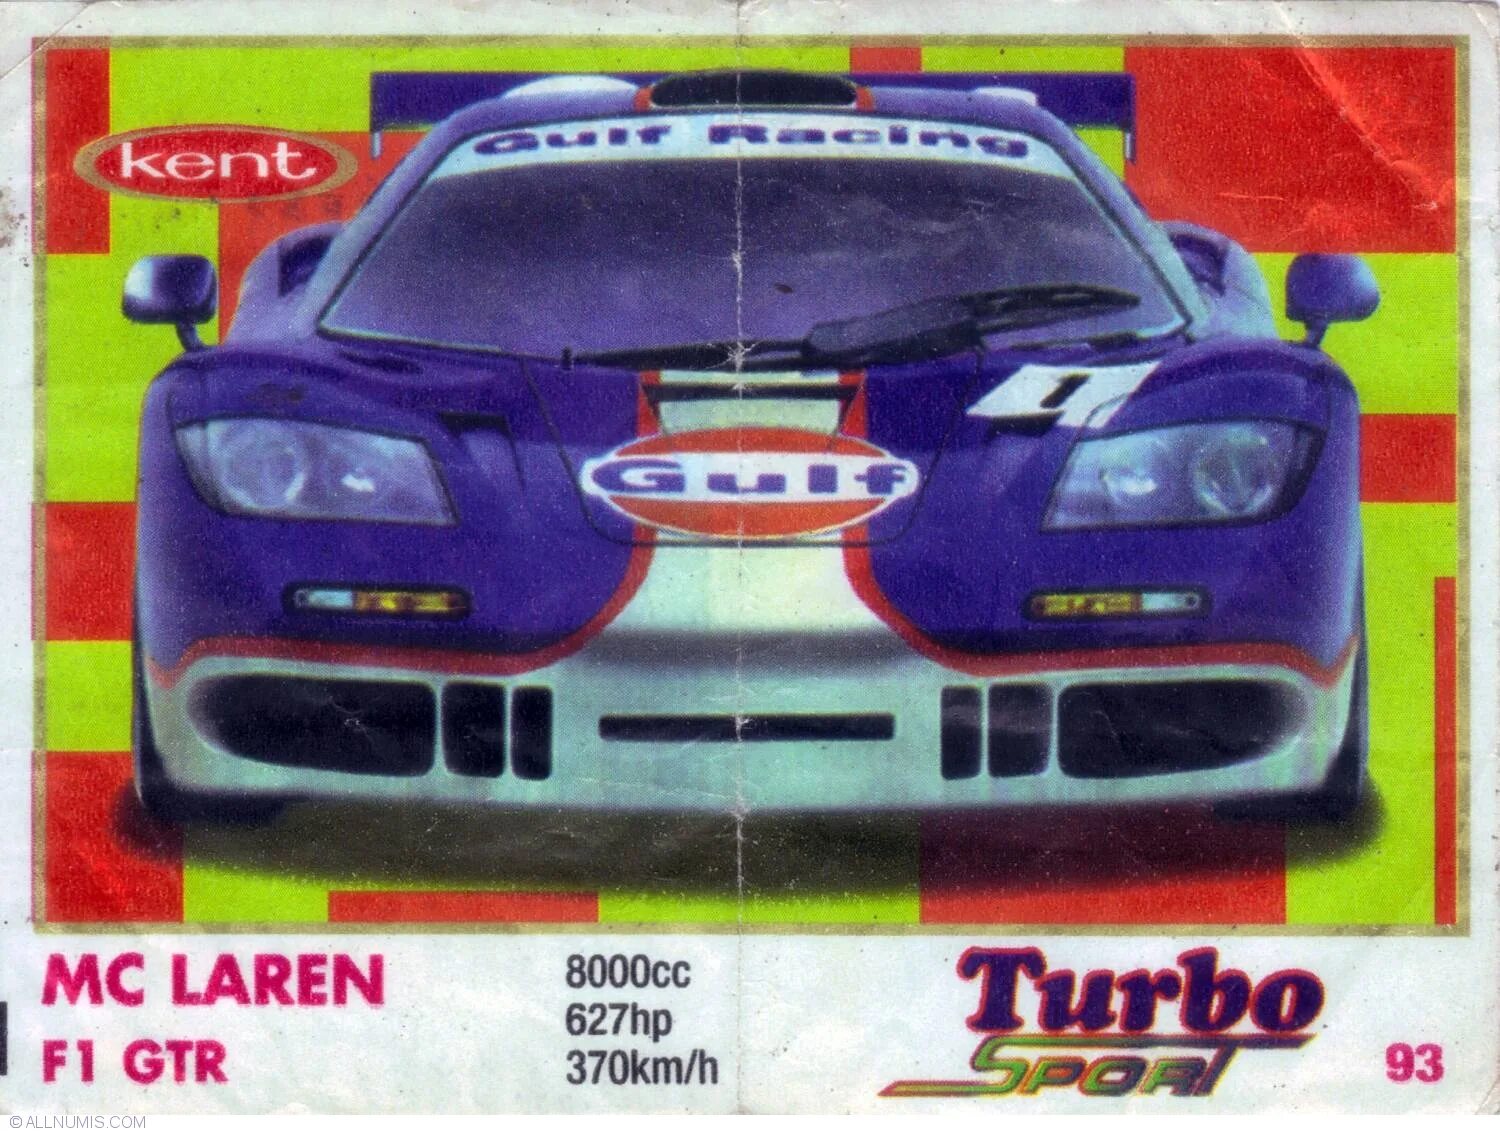 Вкладыши турбо. Жвачка турбо. Вкладыши Racing Turbo Sport. Pontiac Trans Sport жвачка турбо.